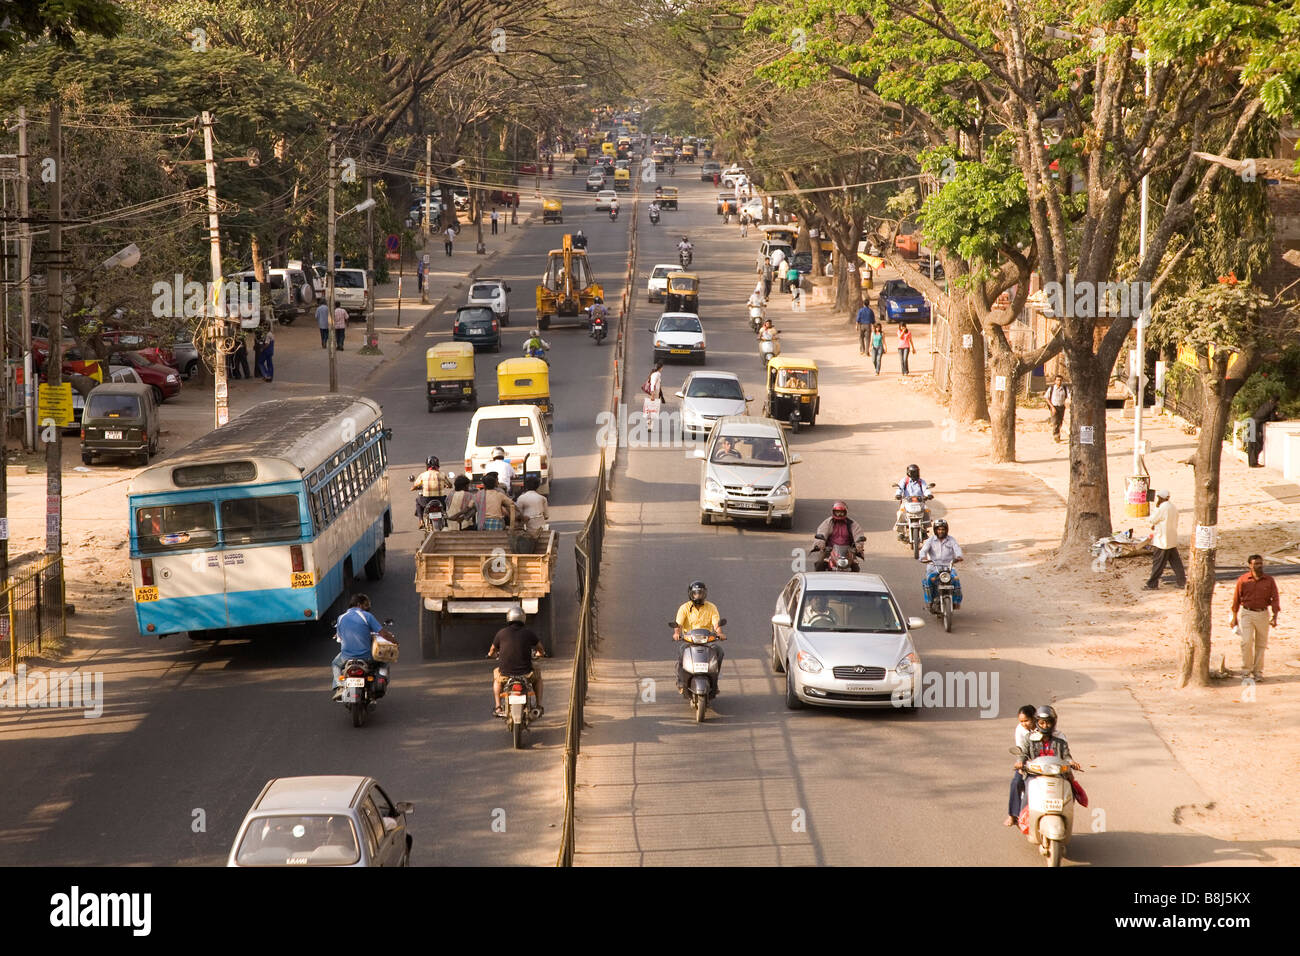 Traffic in Bangalore, India. During rush hour, the traffic in Bangalore soon congests the city's roads. Stock Photo